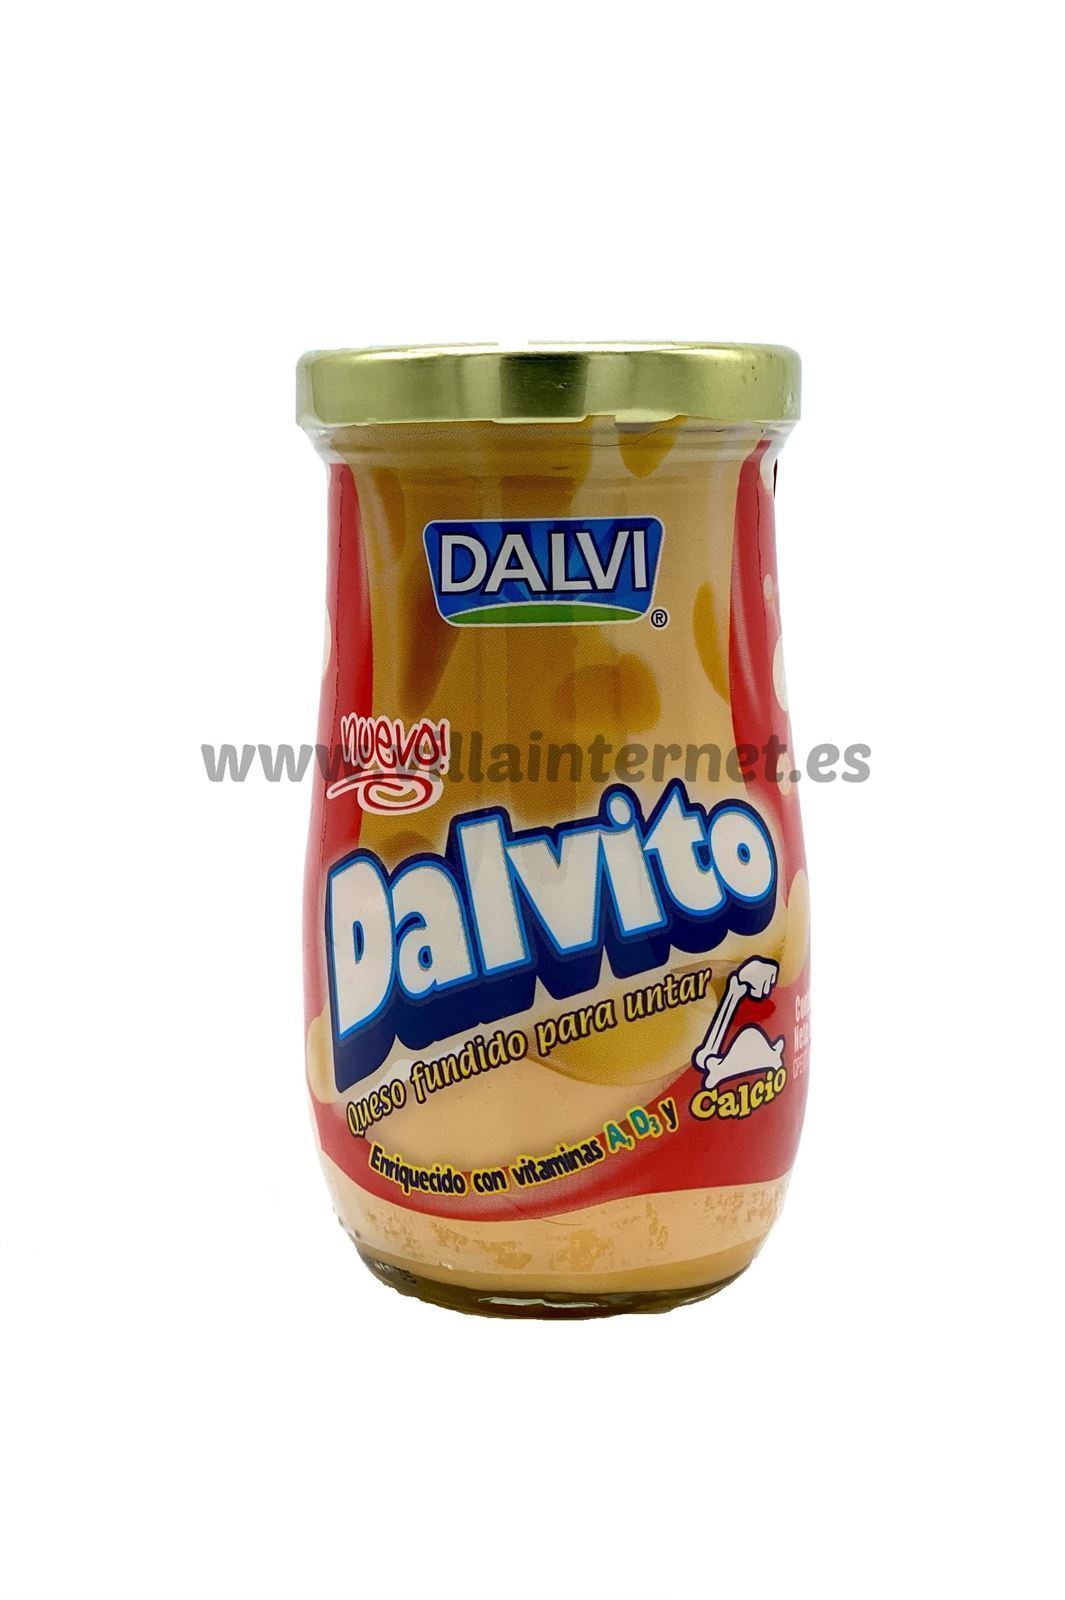 Dalvito 300g - Imagen 1